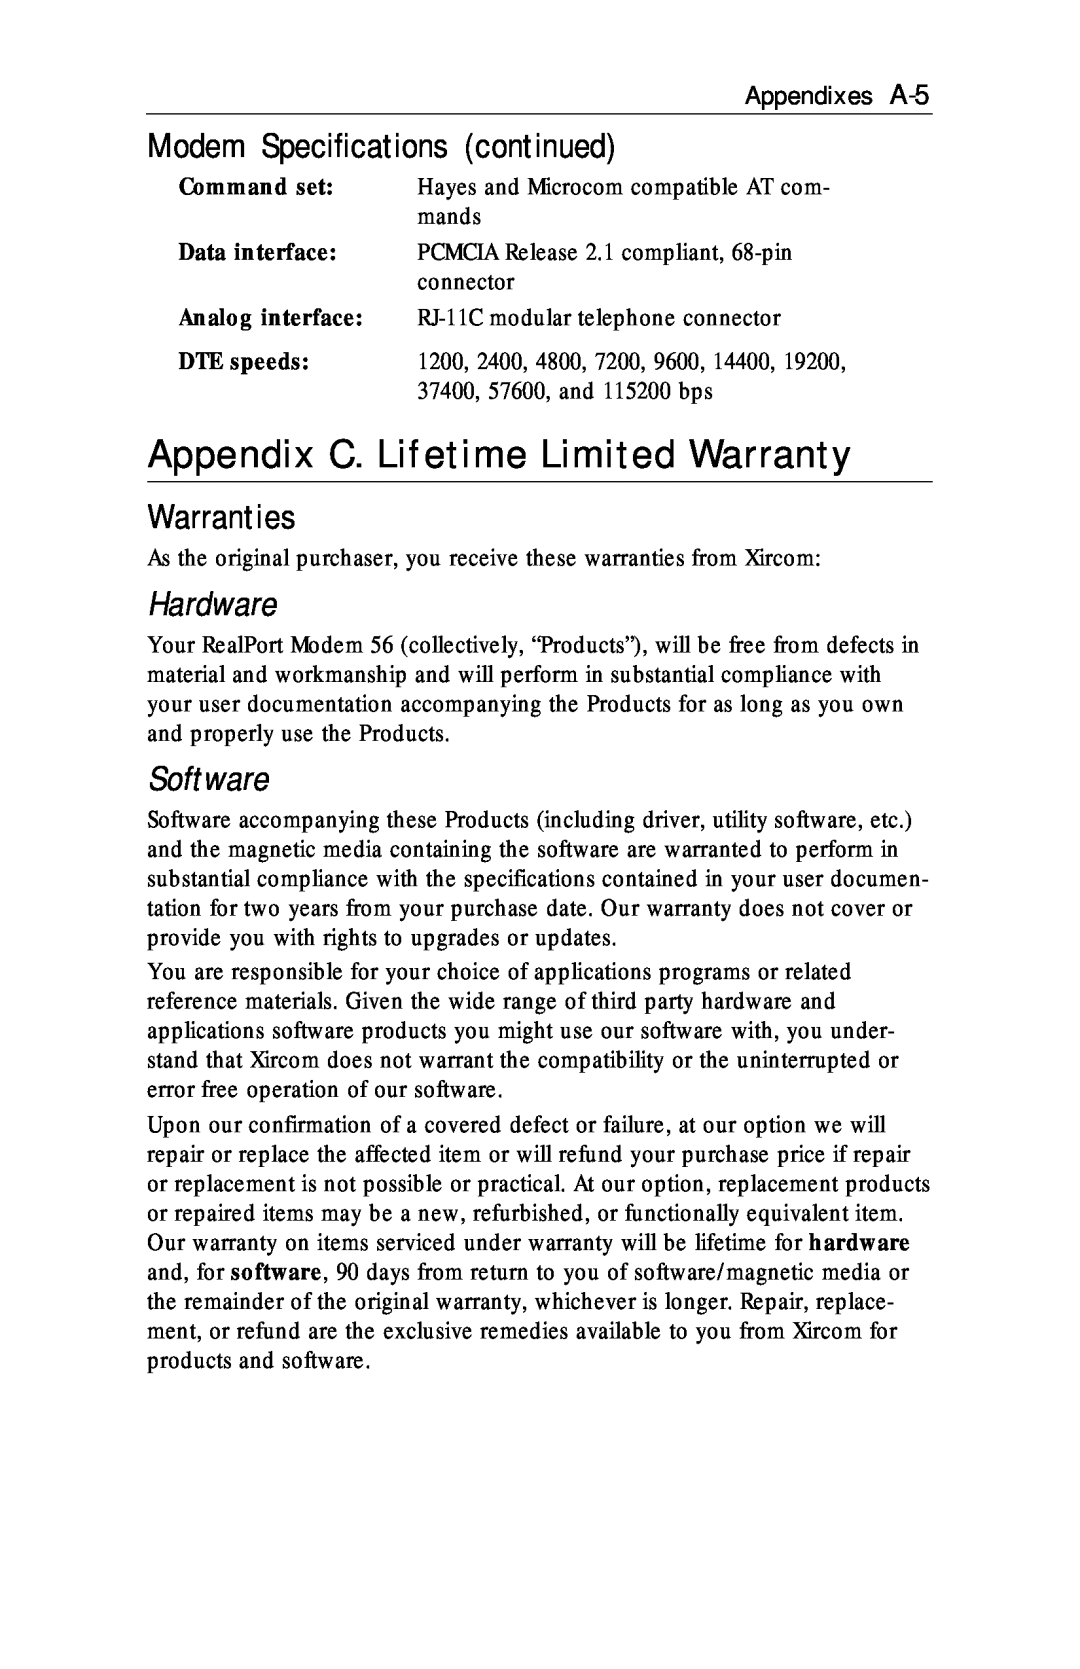 Xircom RM56V1 manual Appendix C. Lifetime Limited Warranty, Modem Specifications continued, Warranties, Hardware, Software 